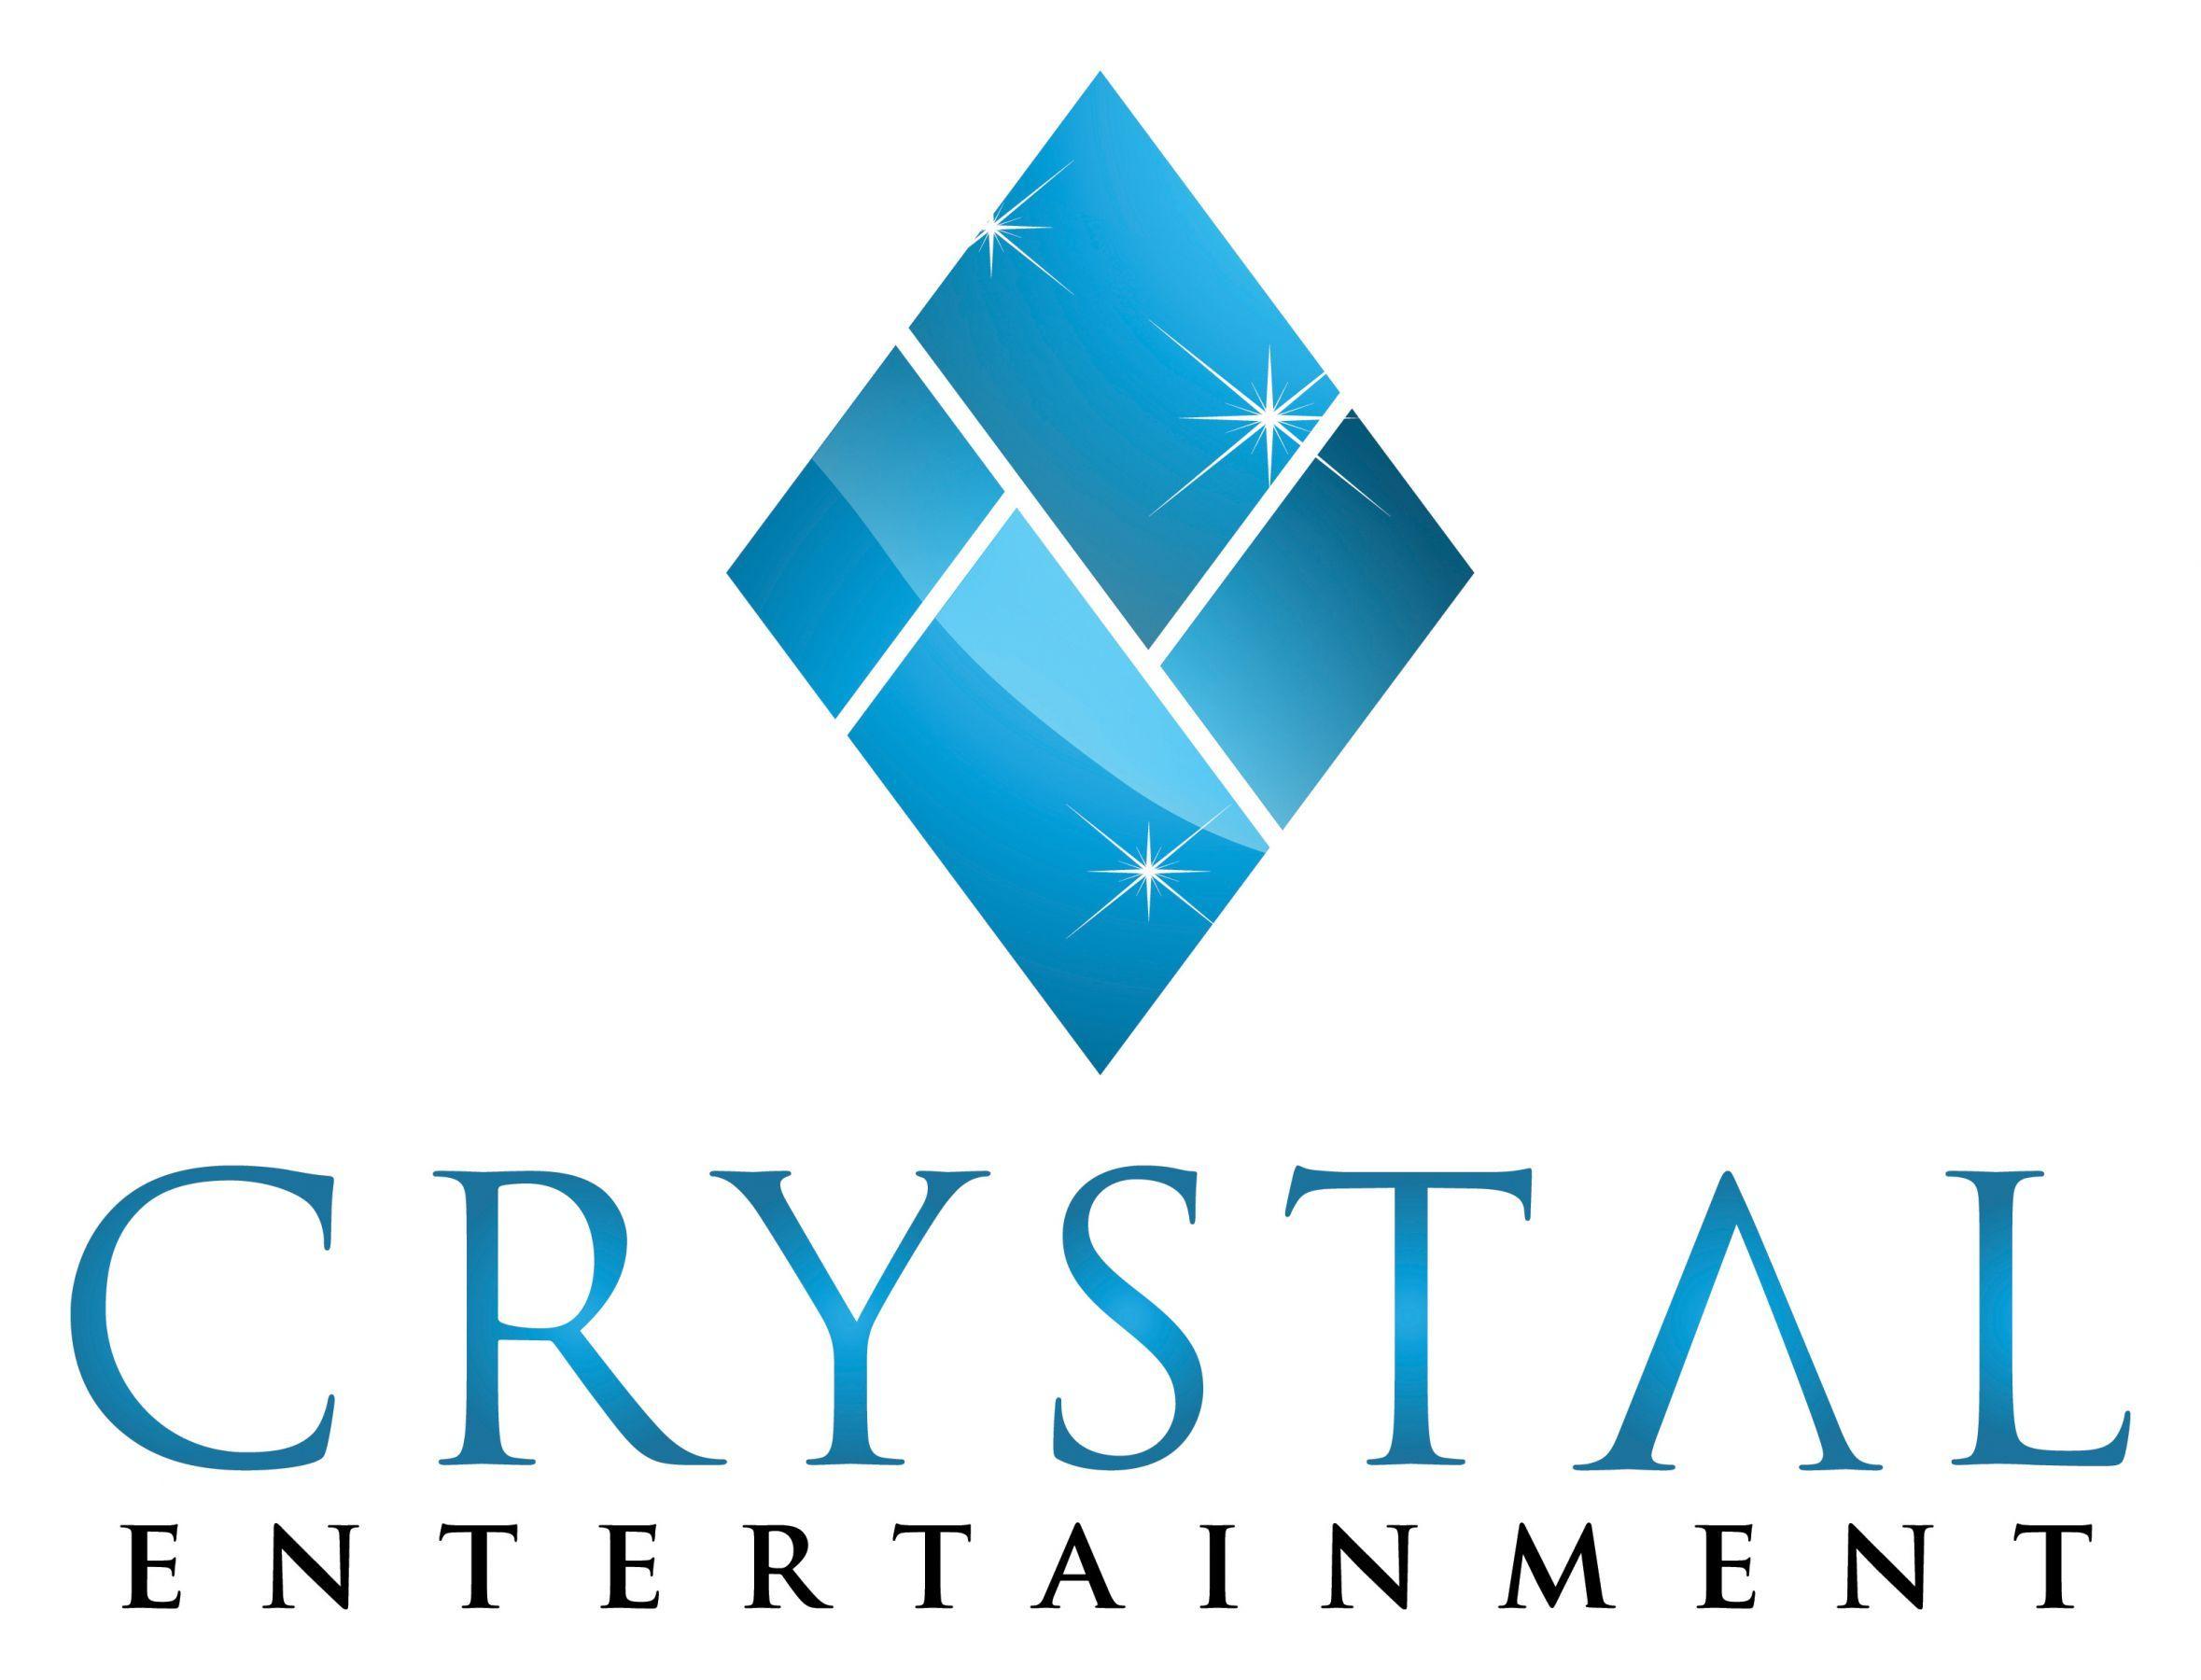 Crystal Logo - Crystal Logos